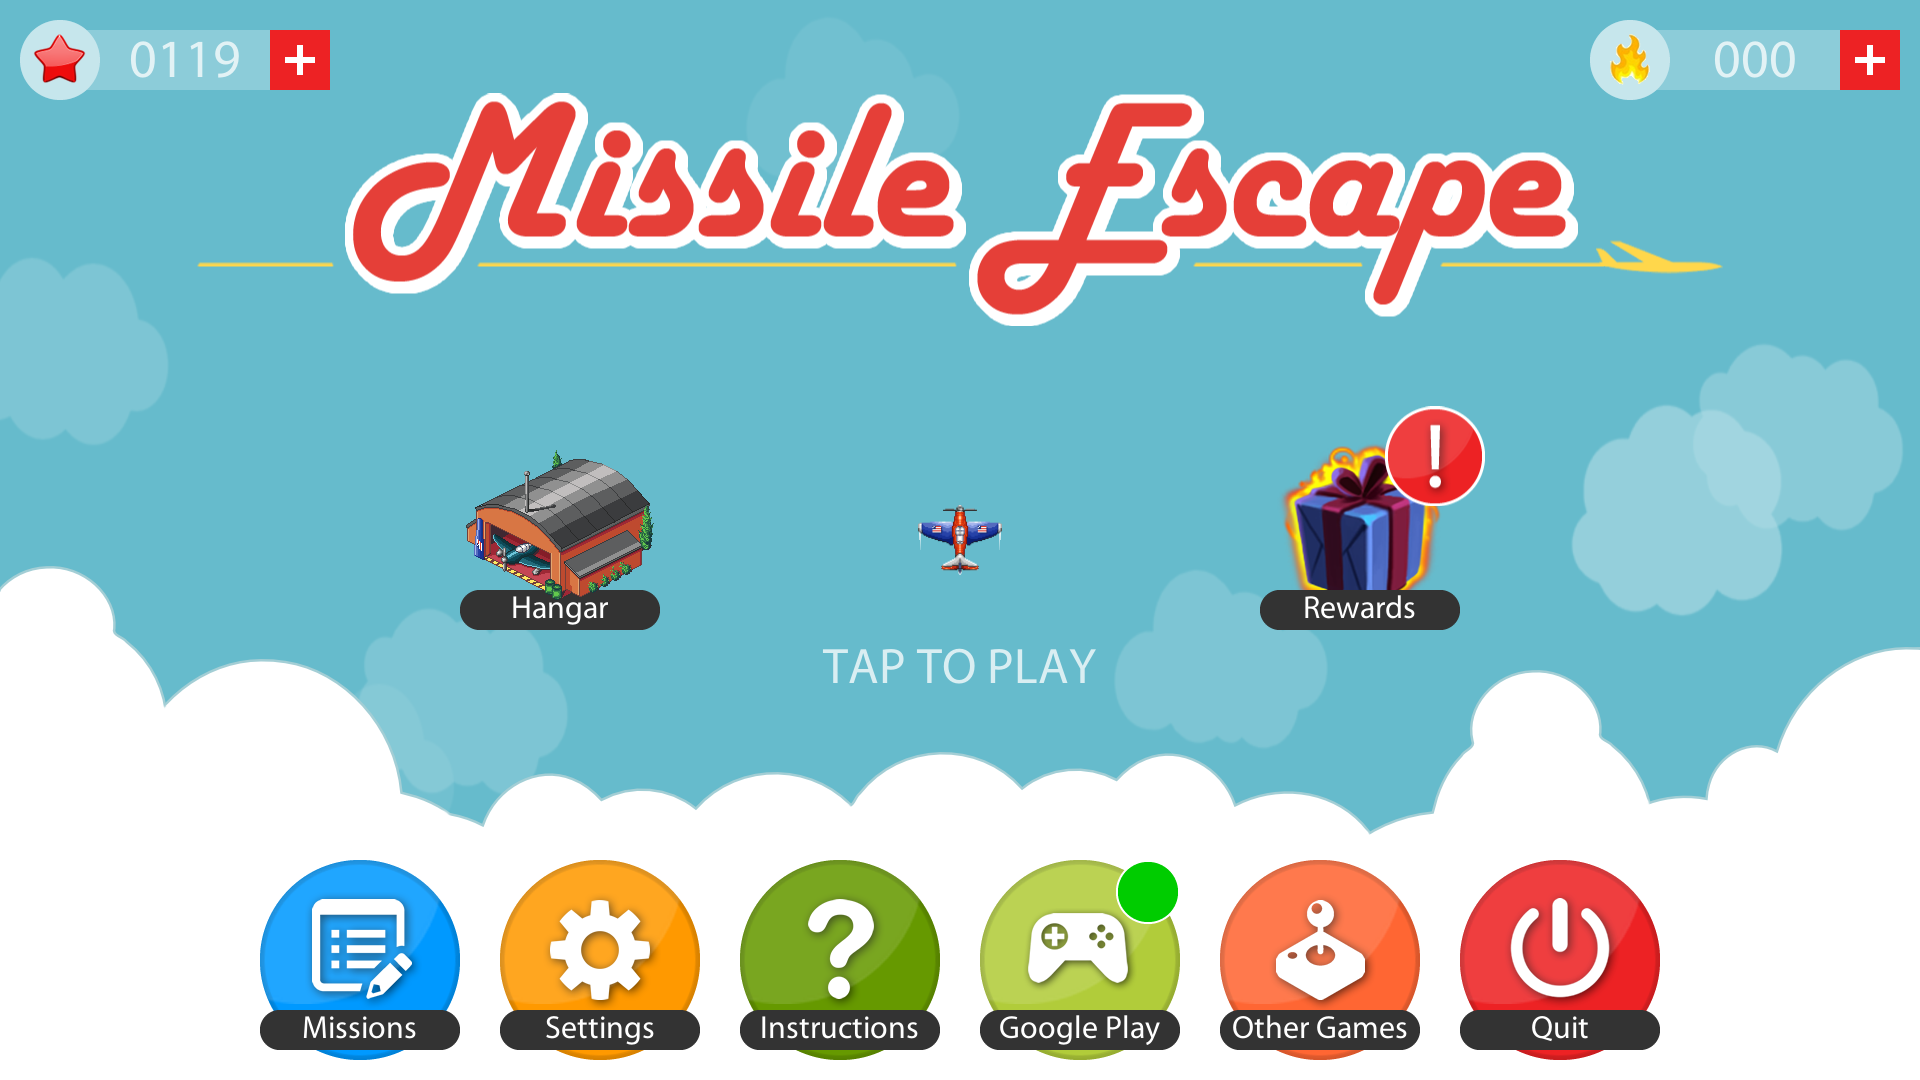 Missile Escape